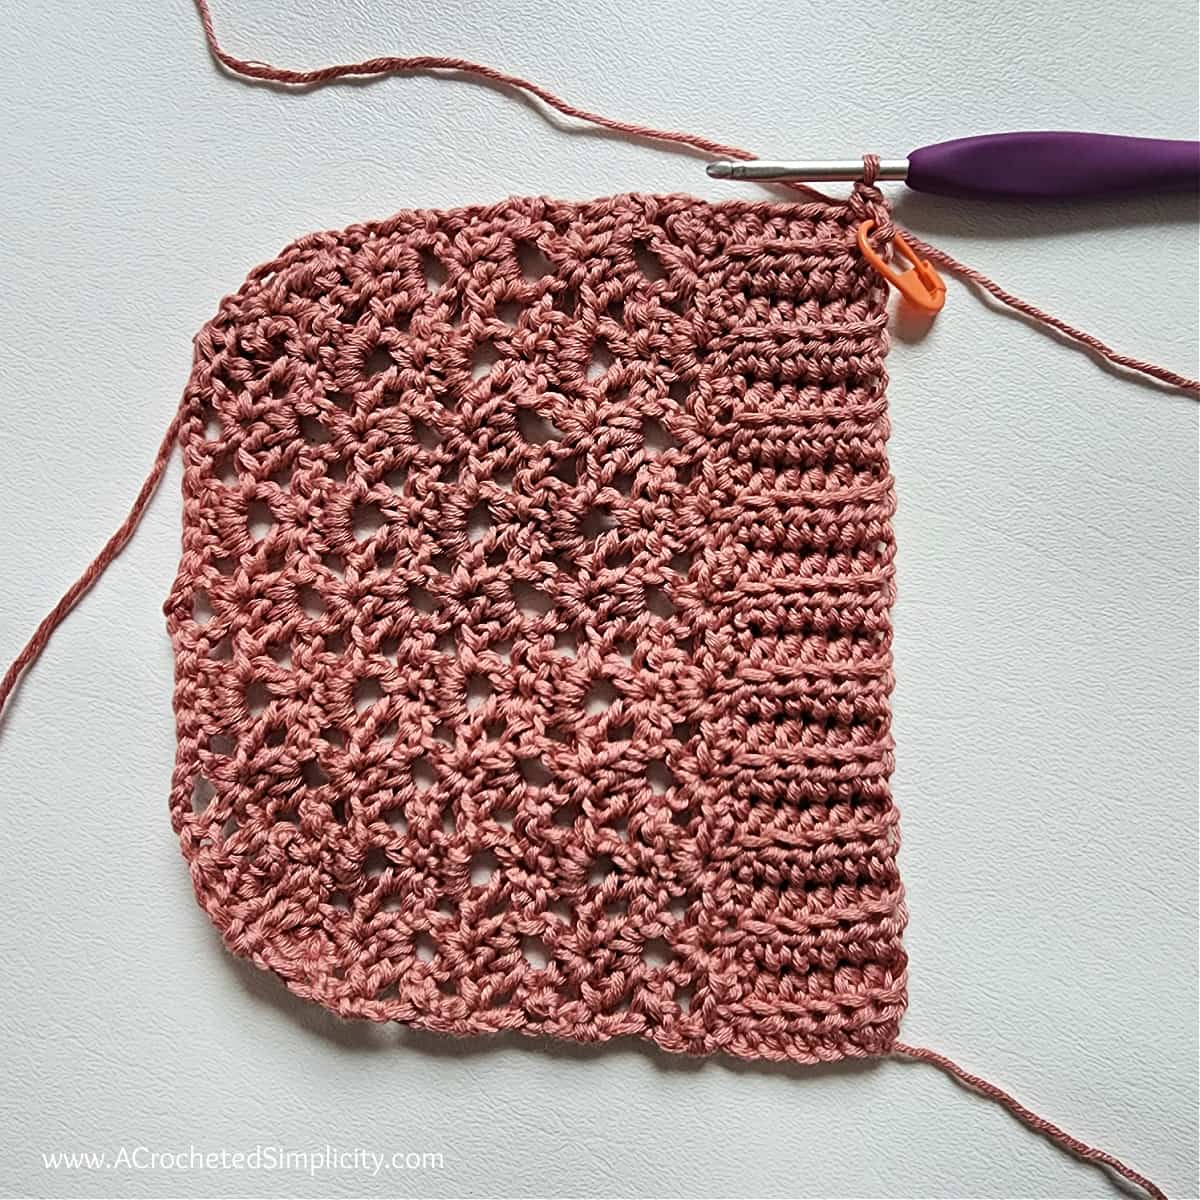 Crochet pocket laid sideways to begin edging with a purple crochet hook.